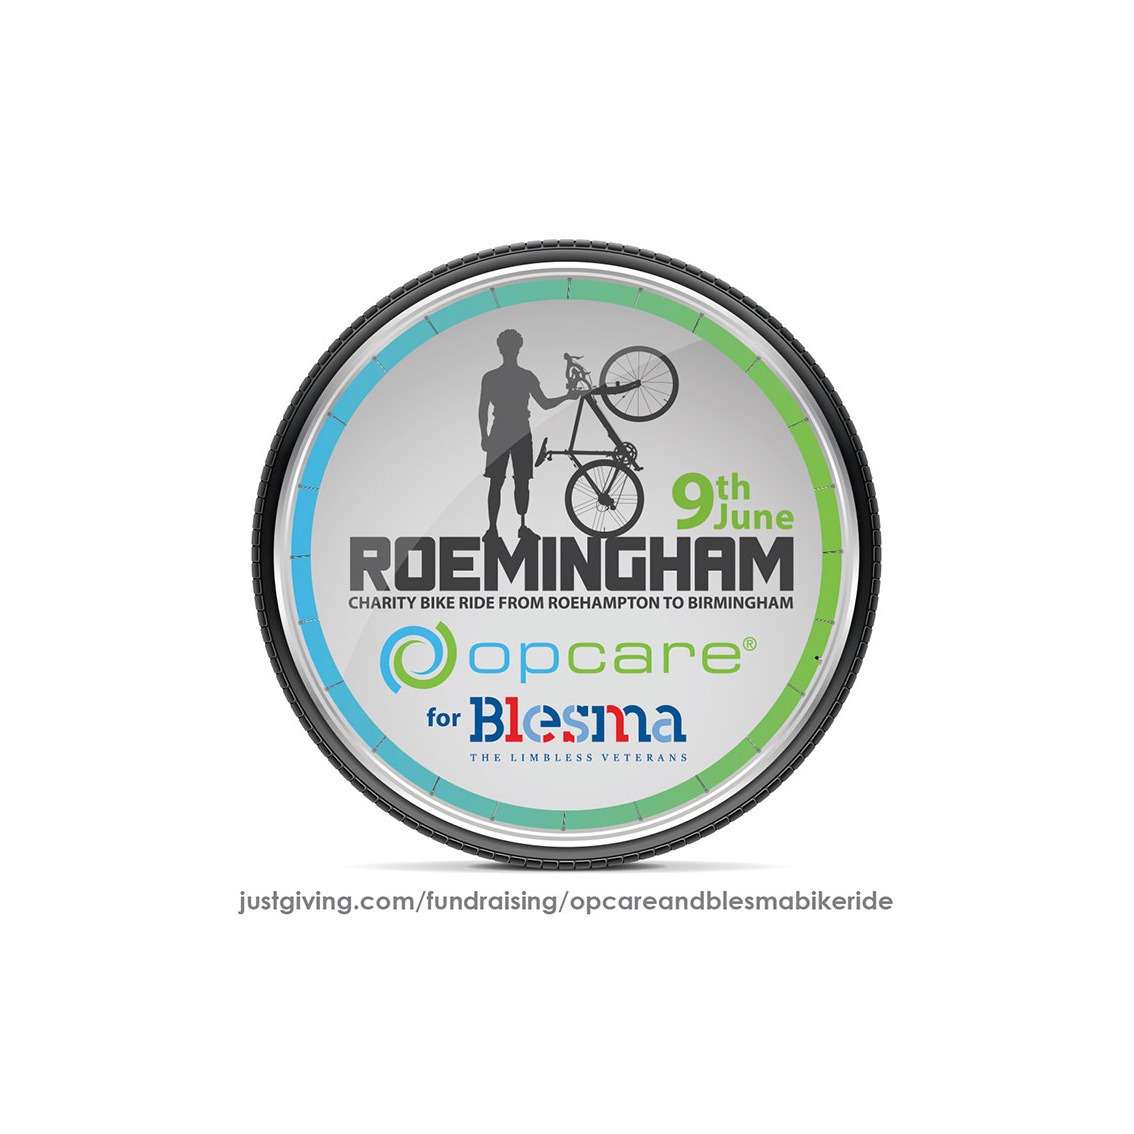 ROEMINGHAM Charity Bike Ride